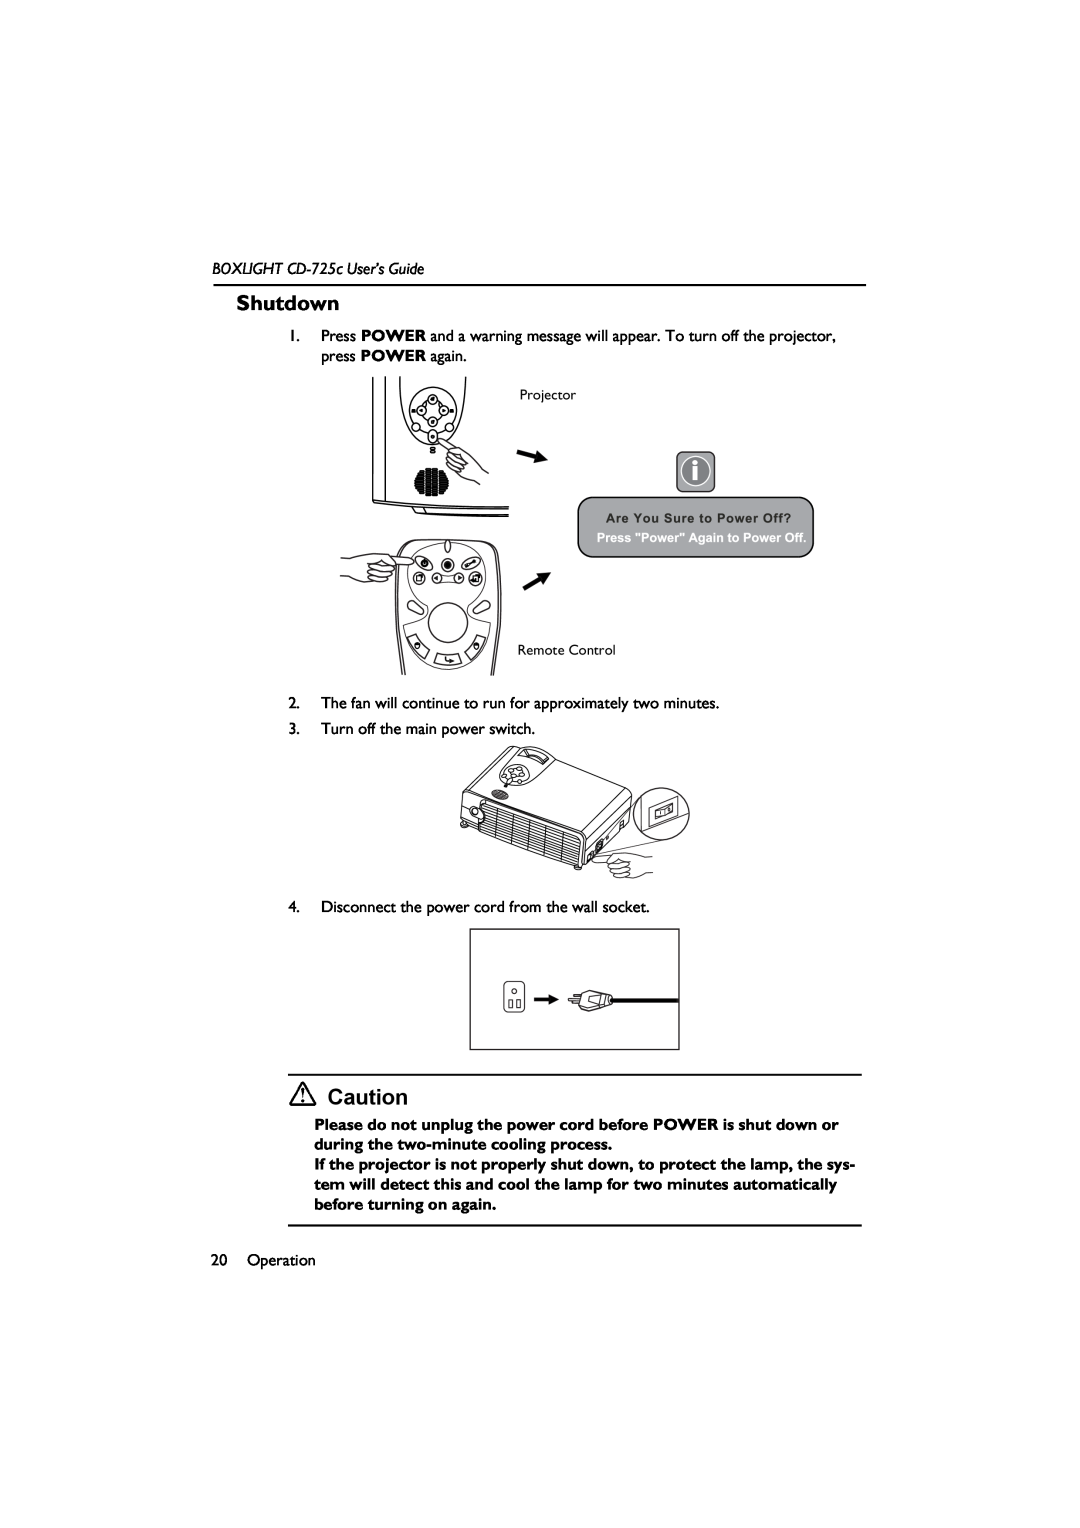 BOXLIGHT manual Shutdown, BOXLIGHT CD-725c User’s Guide 